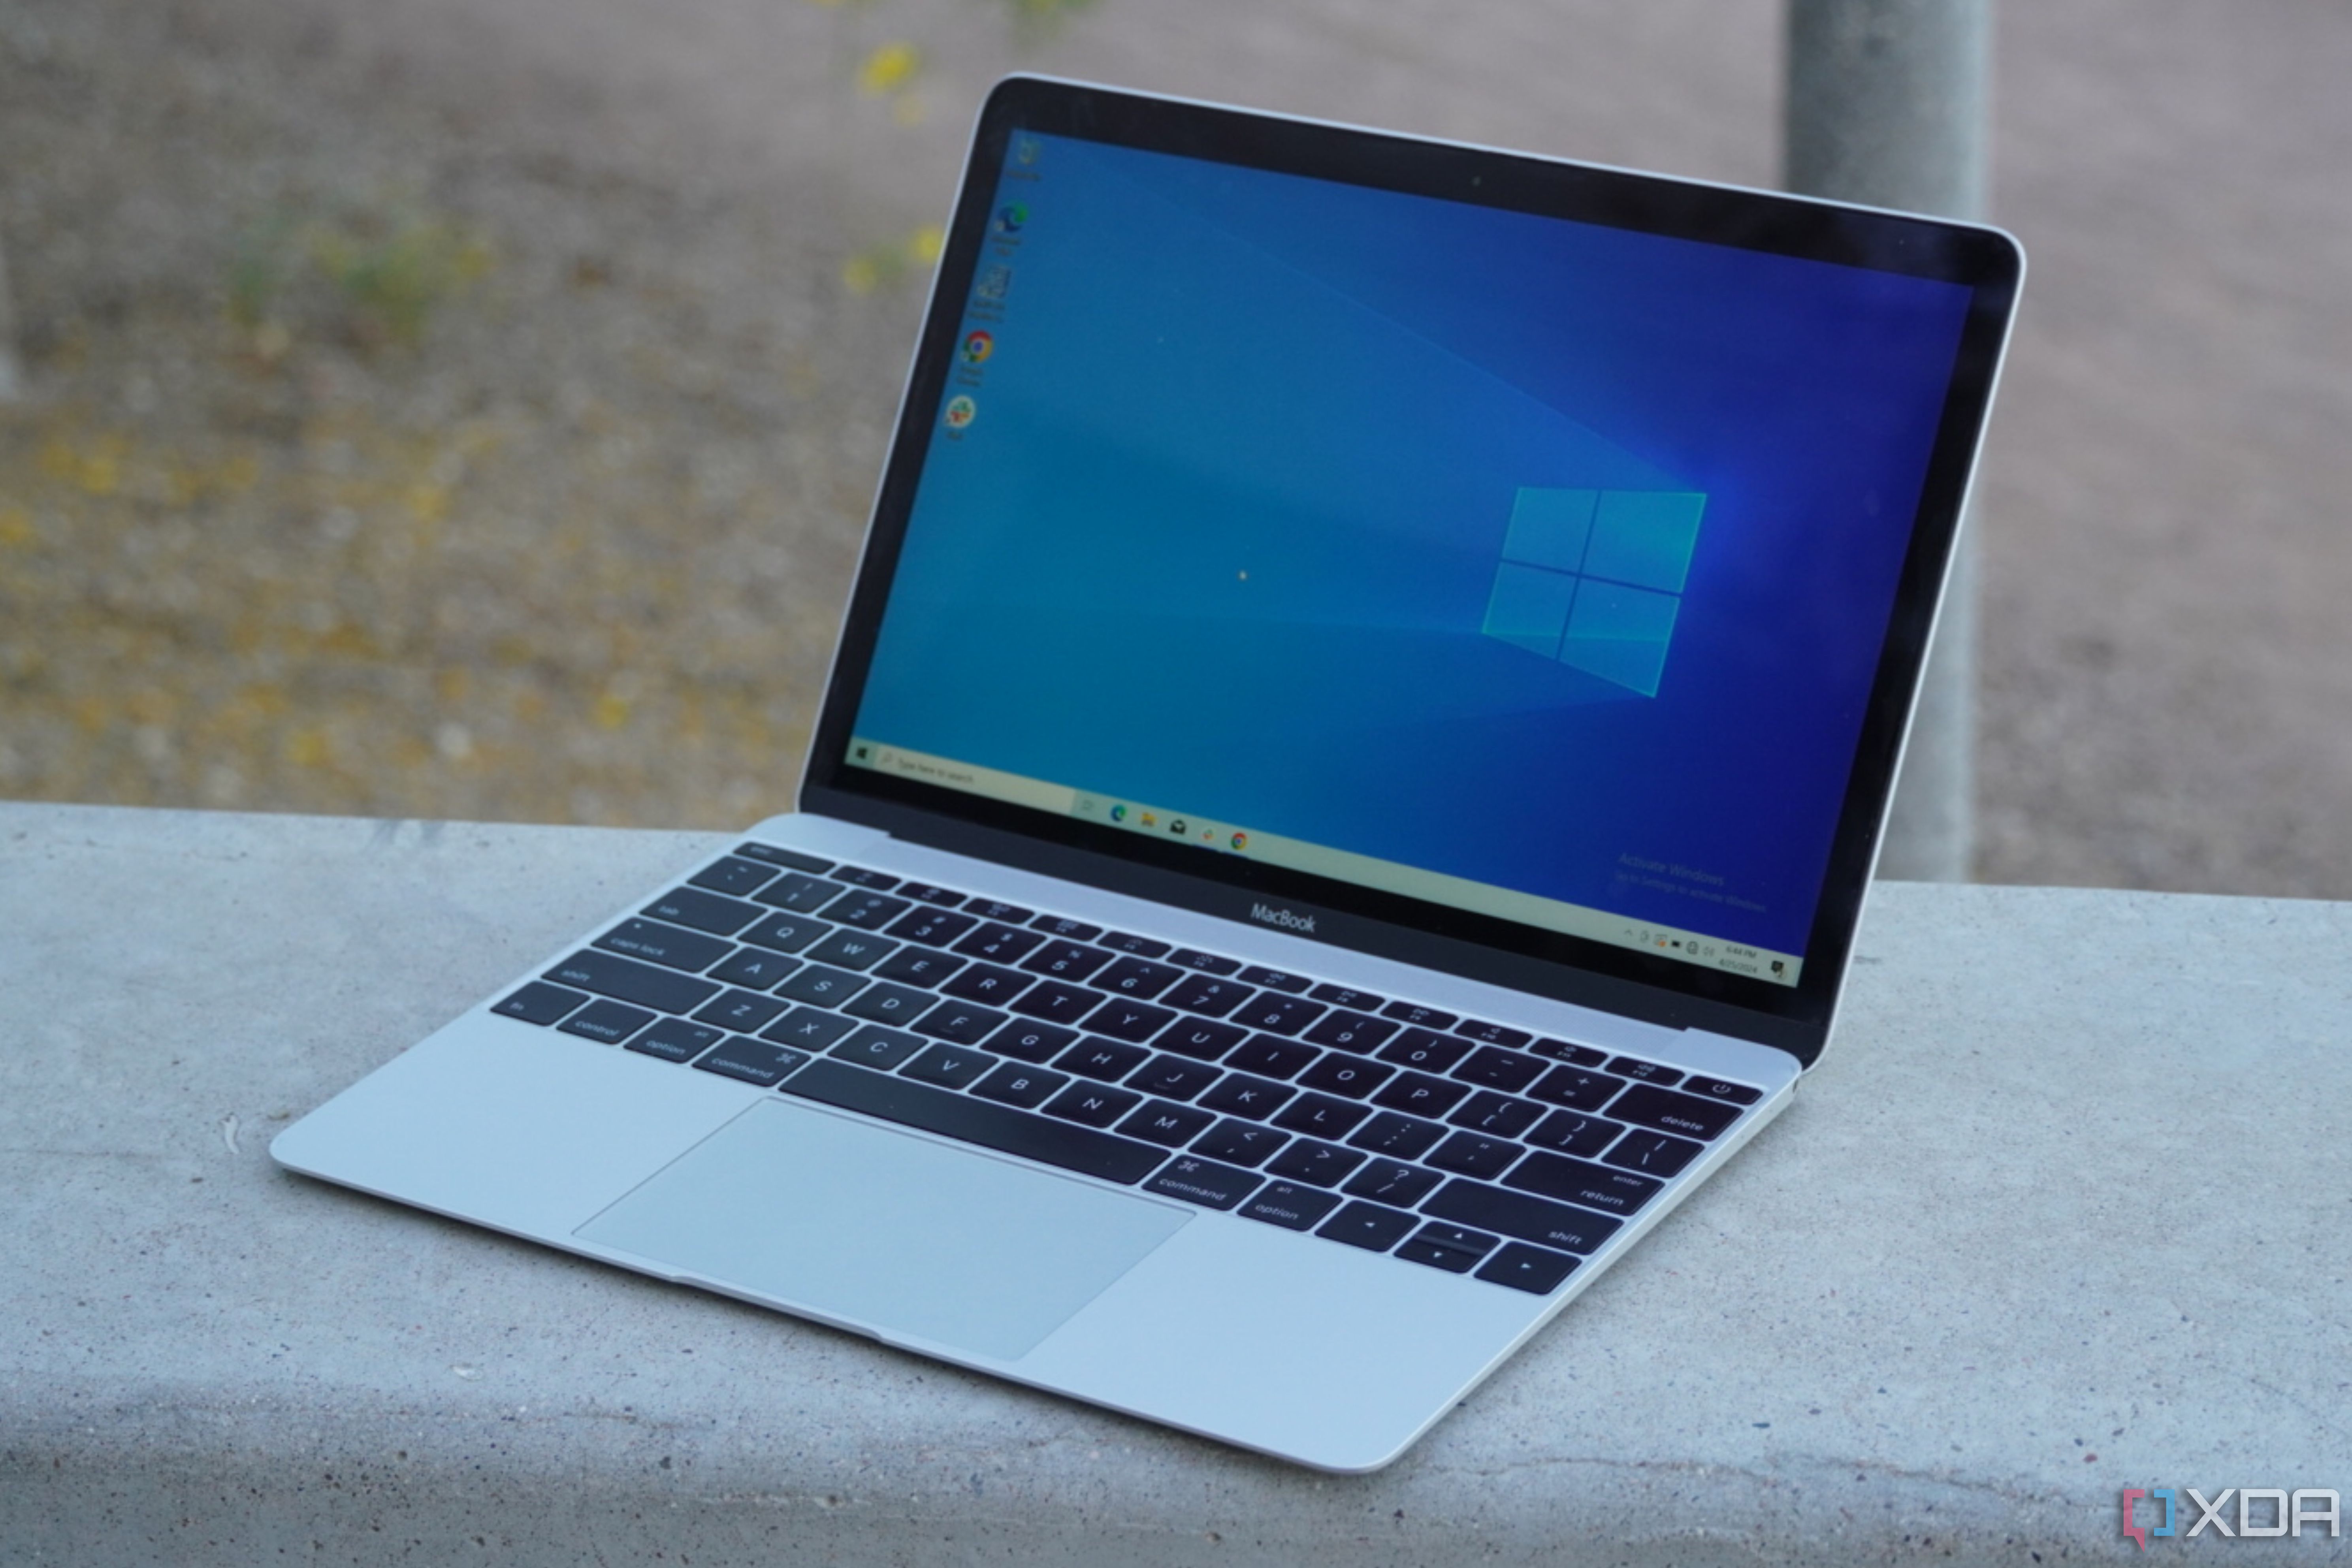 Windows 10 running on a 12-inch MacBook.